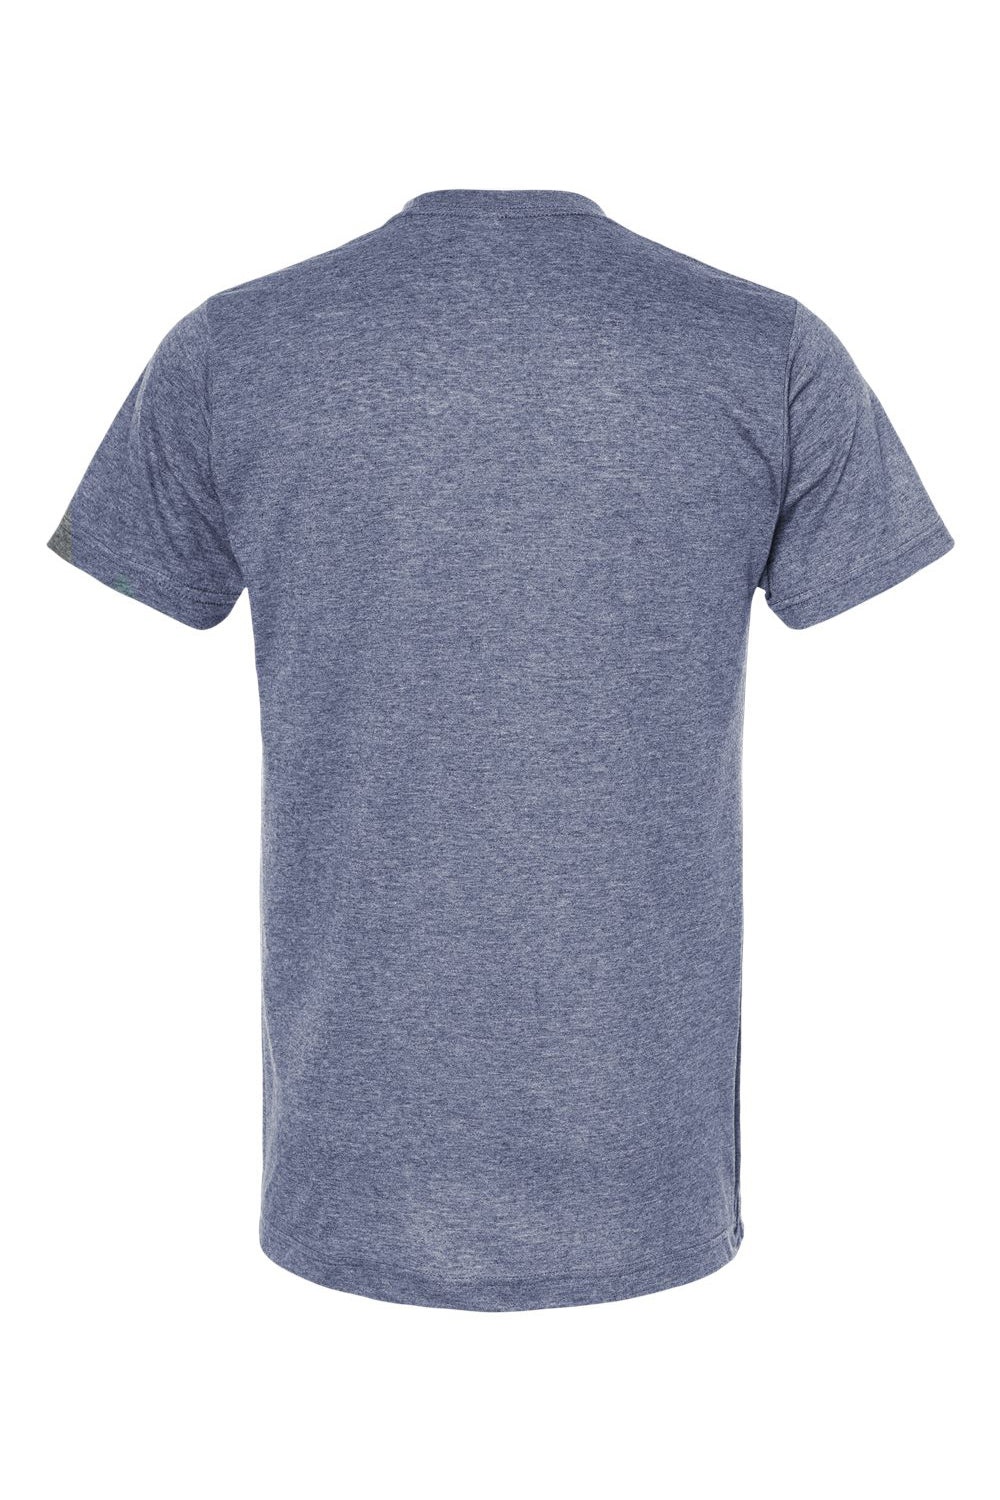 Tultex 241 Mens Poly-Rich Short Sleeve Crewneck T-Shirt Heather Denim Blue Flat Back